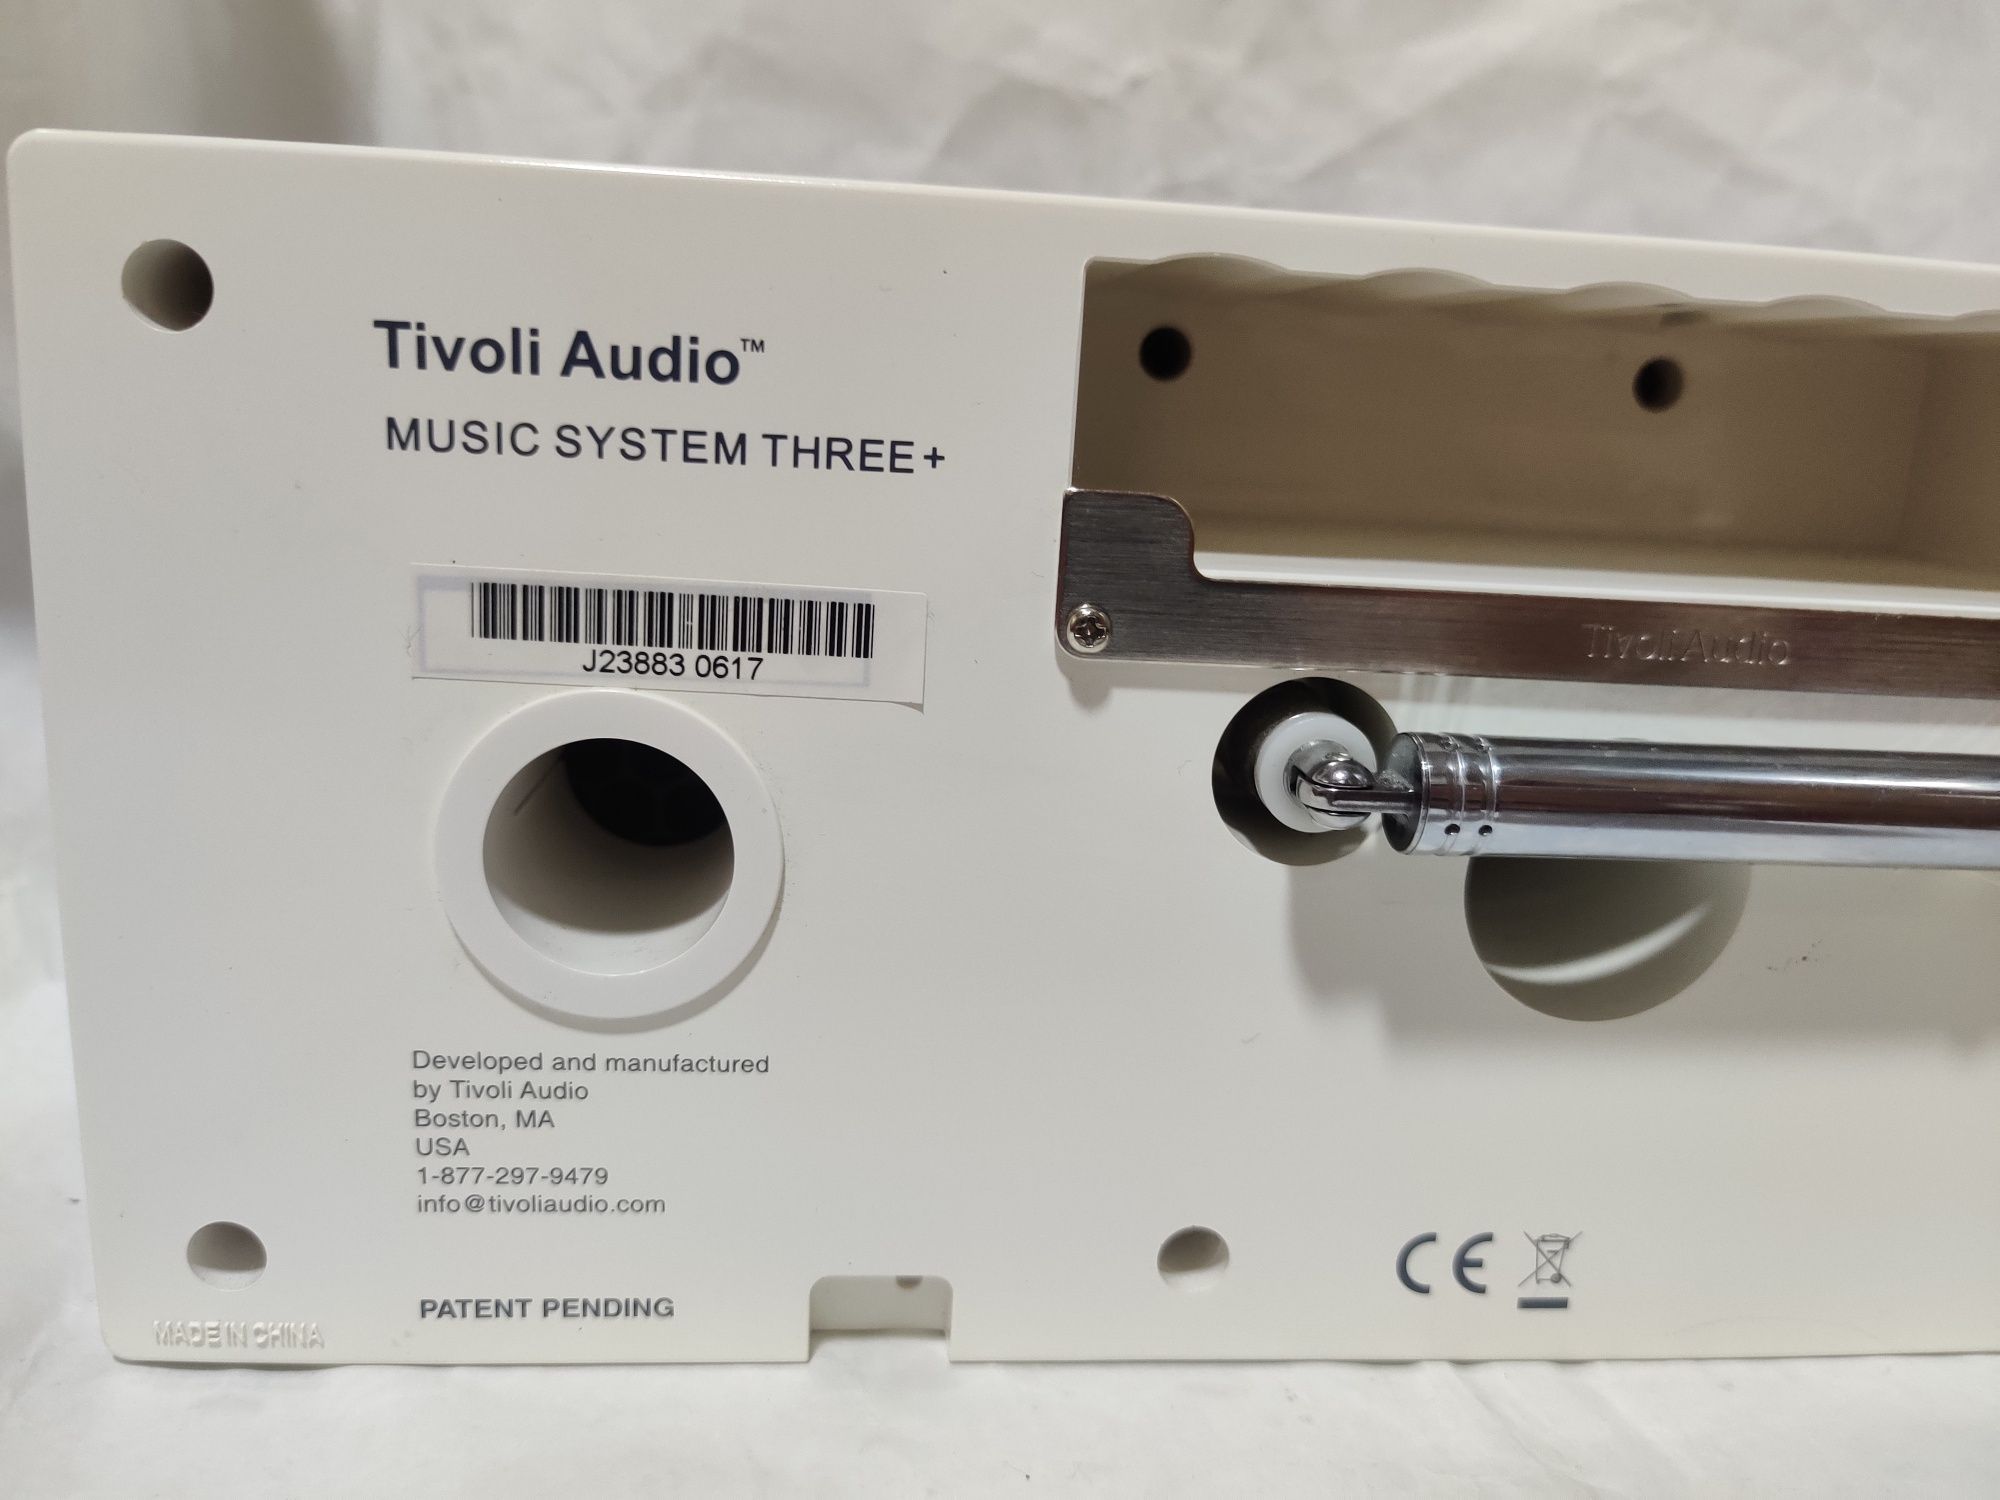 Tivoli Audio Music System Three+ - Portable DAB+/FM Bluetooth